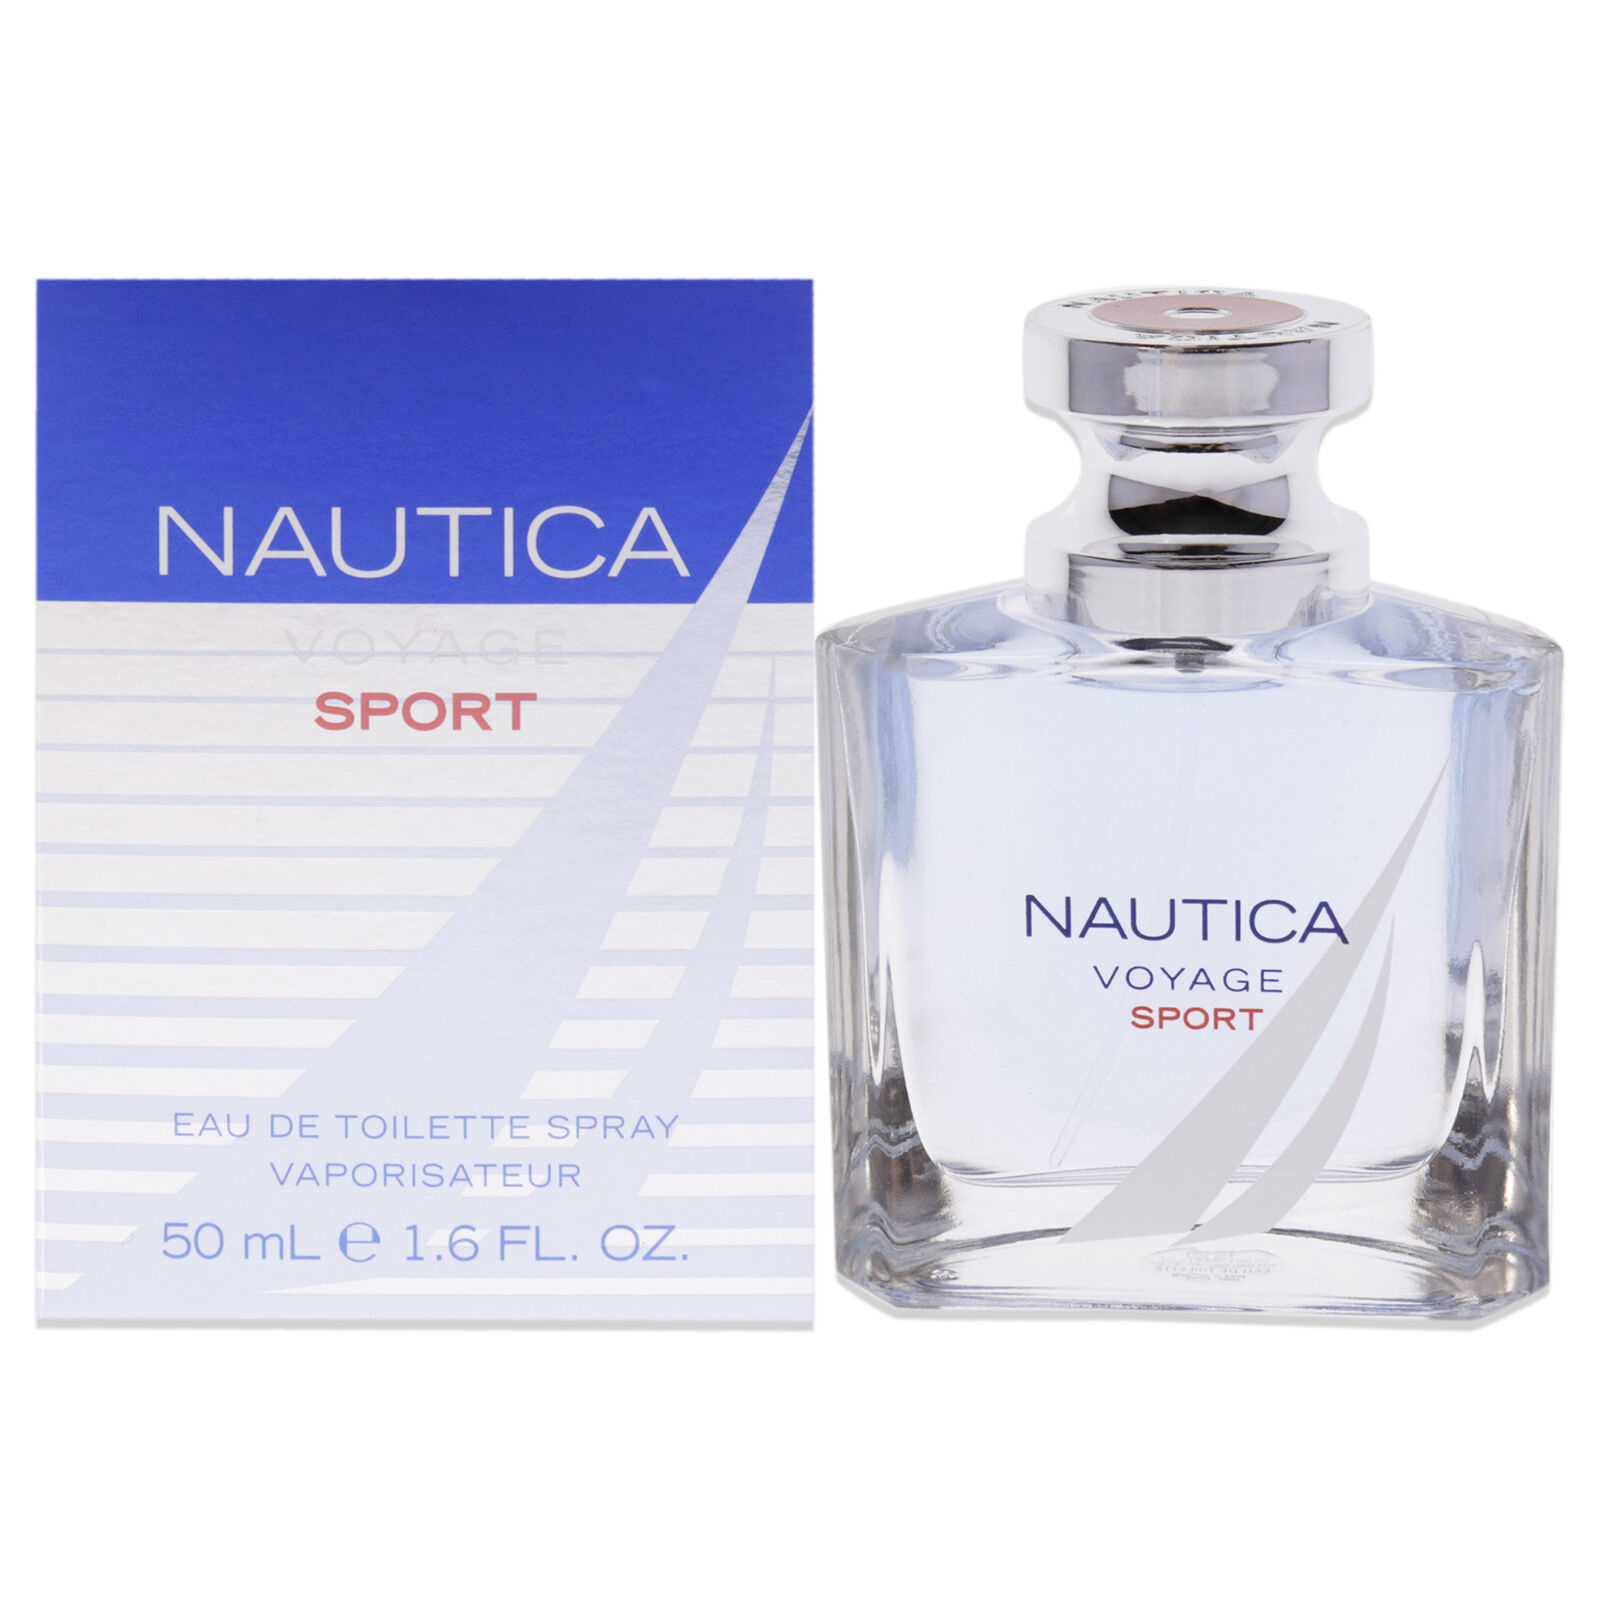 Nautica Voyage Sport EDT 1.6 FL OZ